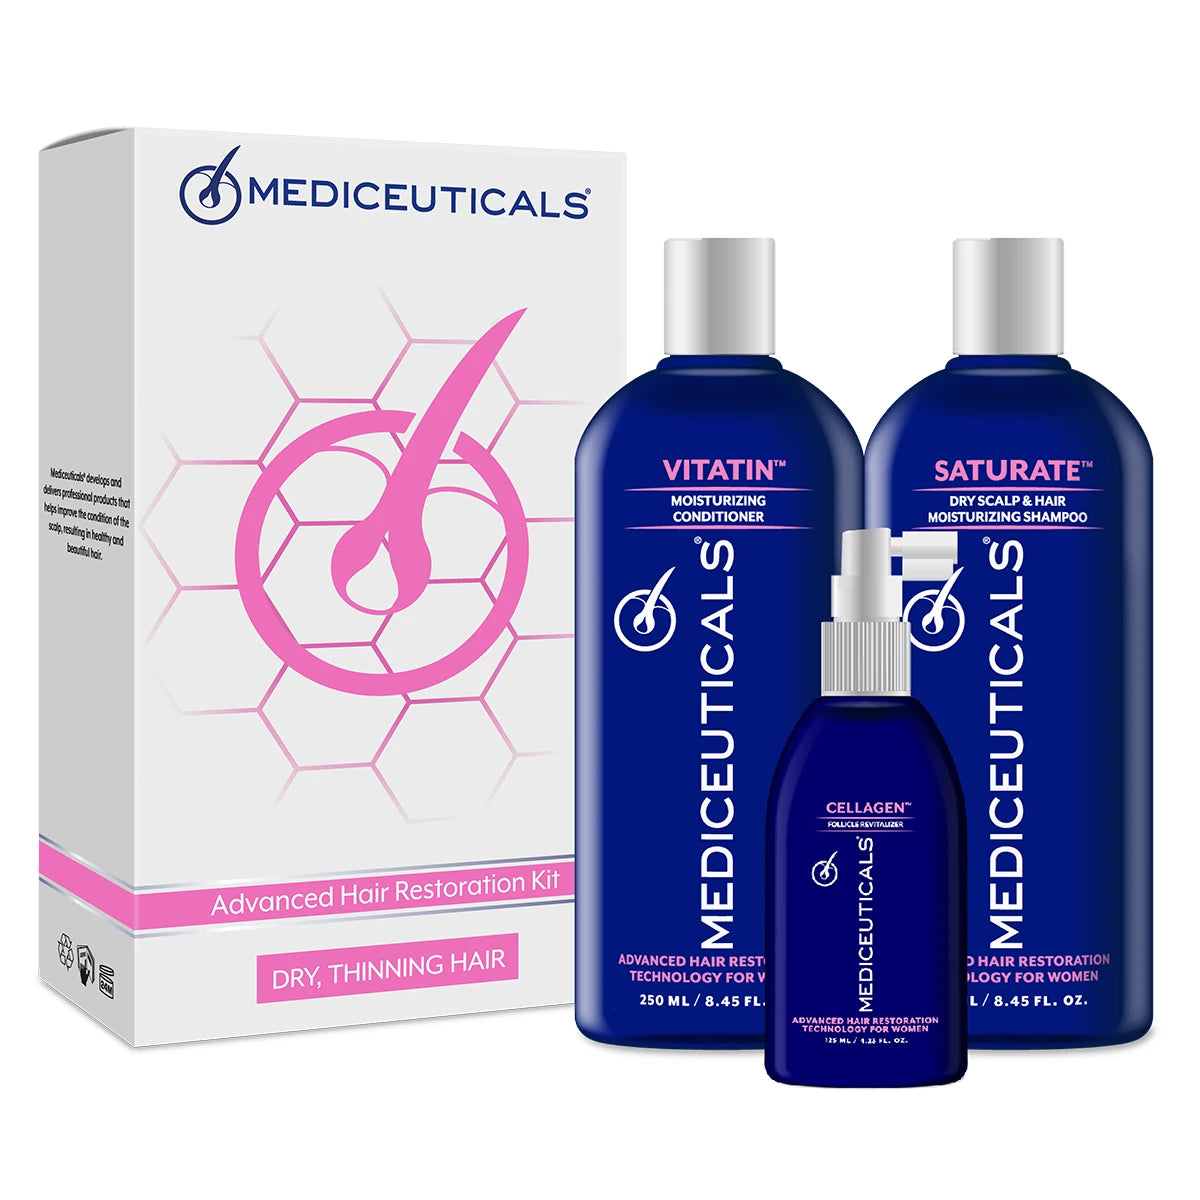 Mediceuticals Hair Restoration Kit For Woman Dry